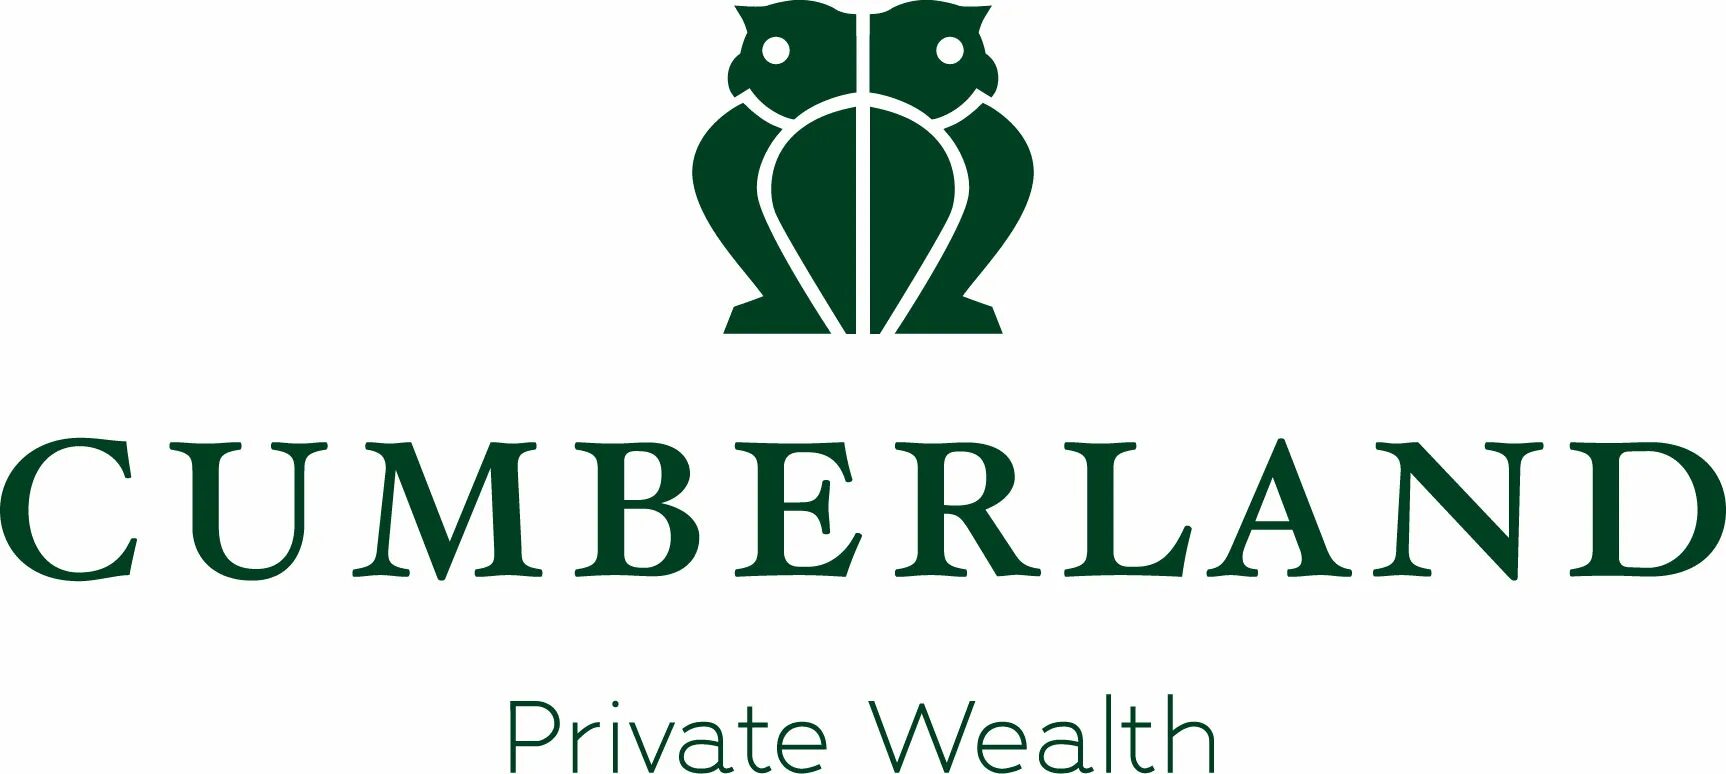 Private login. Камберленд Юн logo. Логотип приват Хаус. Sino Wealth лого. Cumberland аналитики.